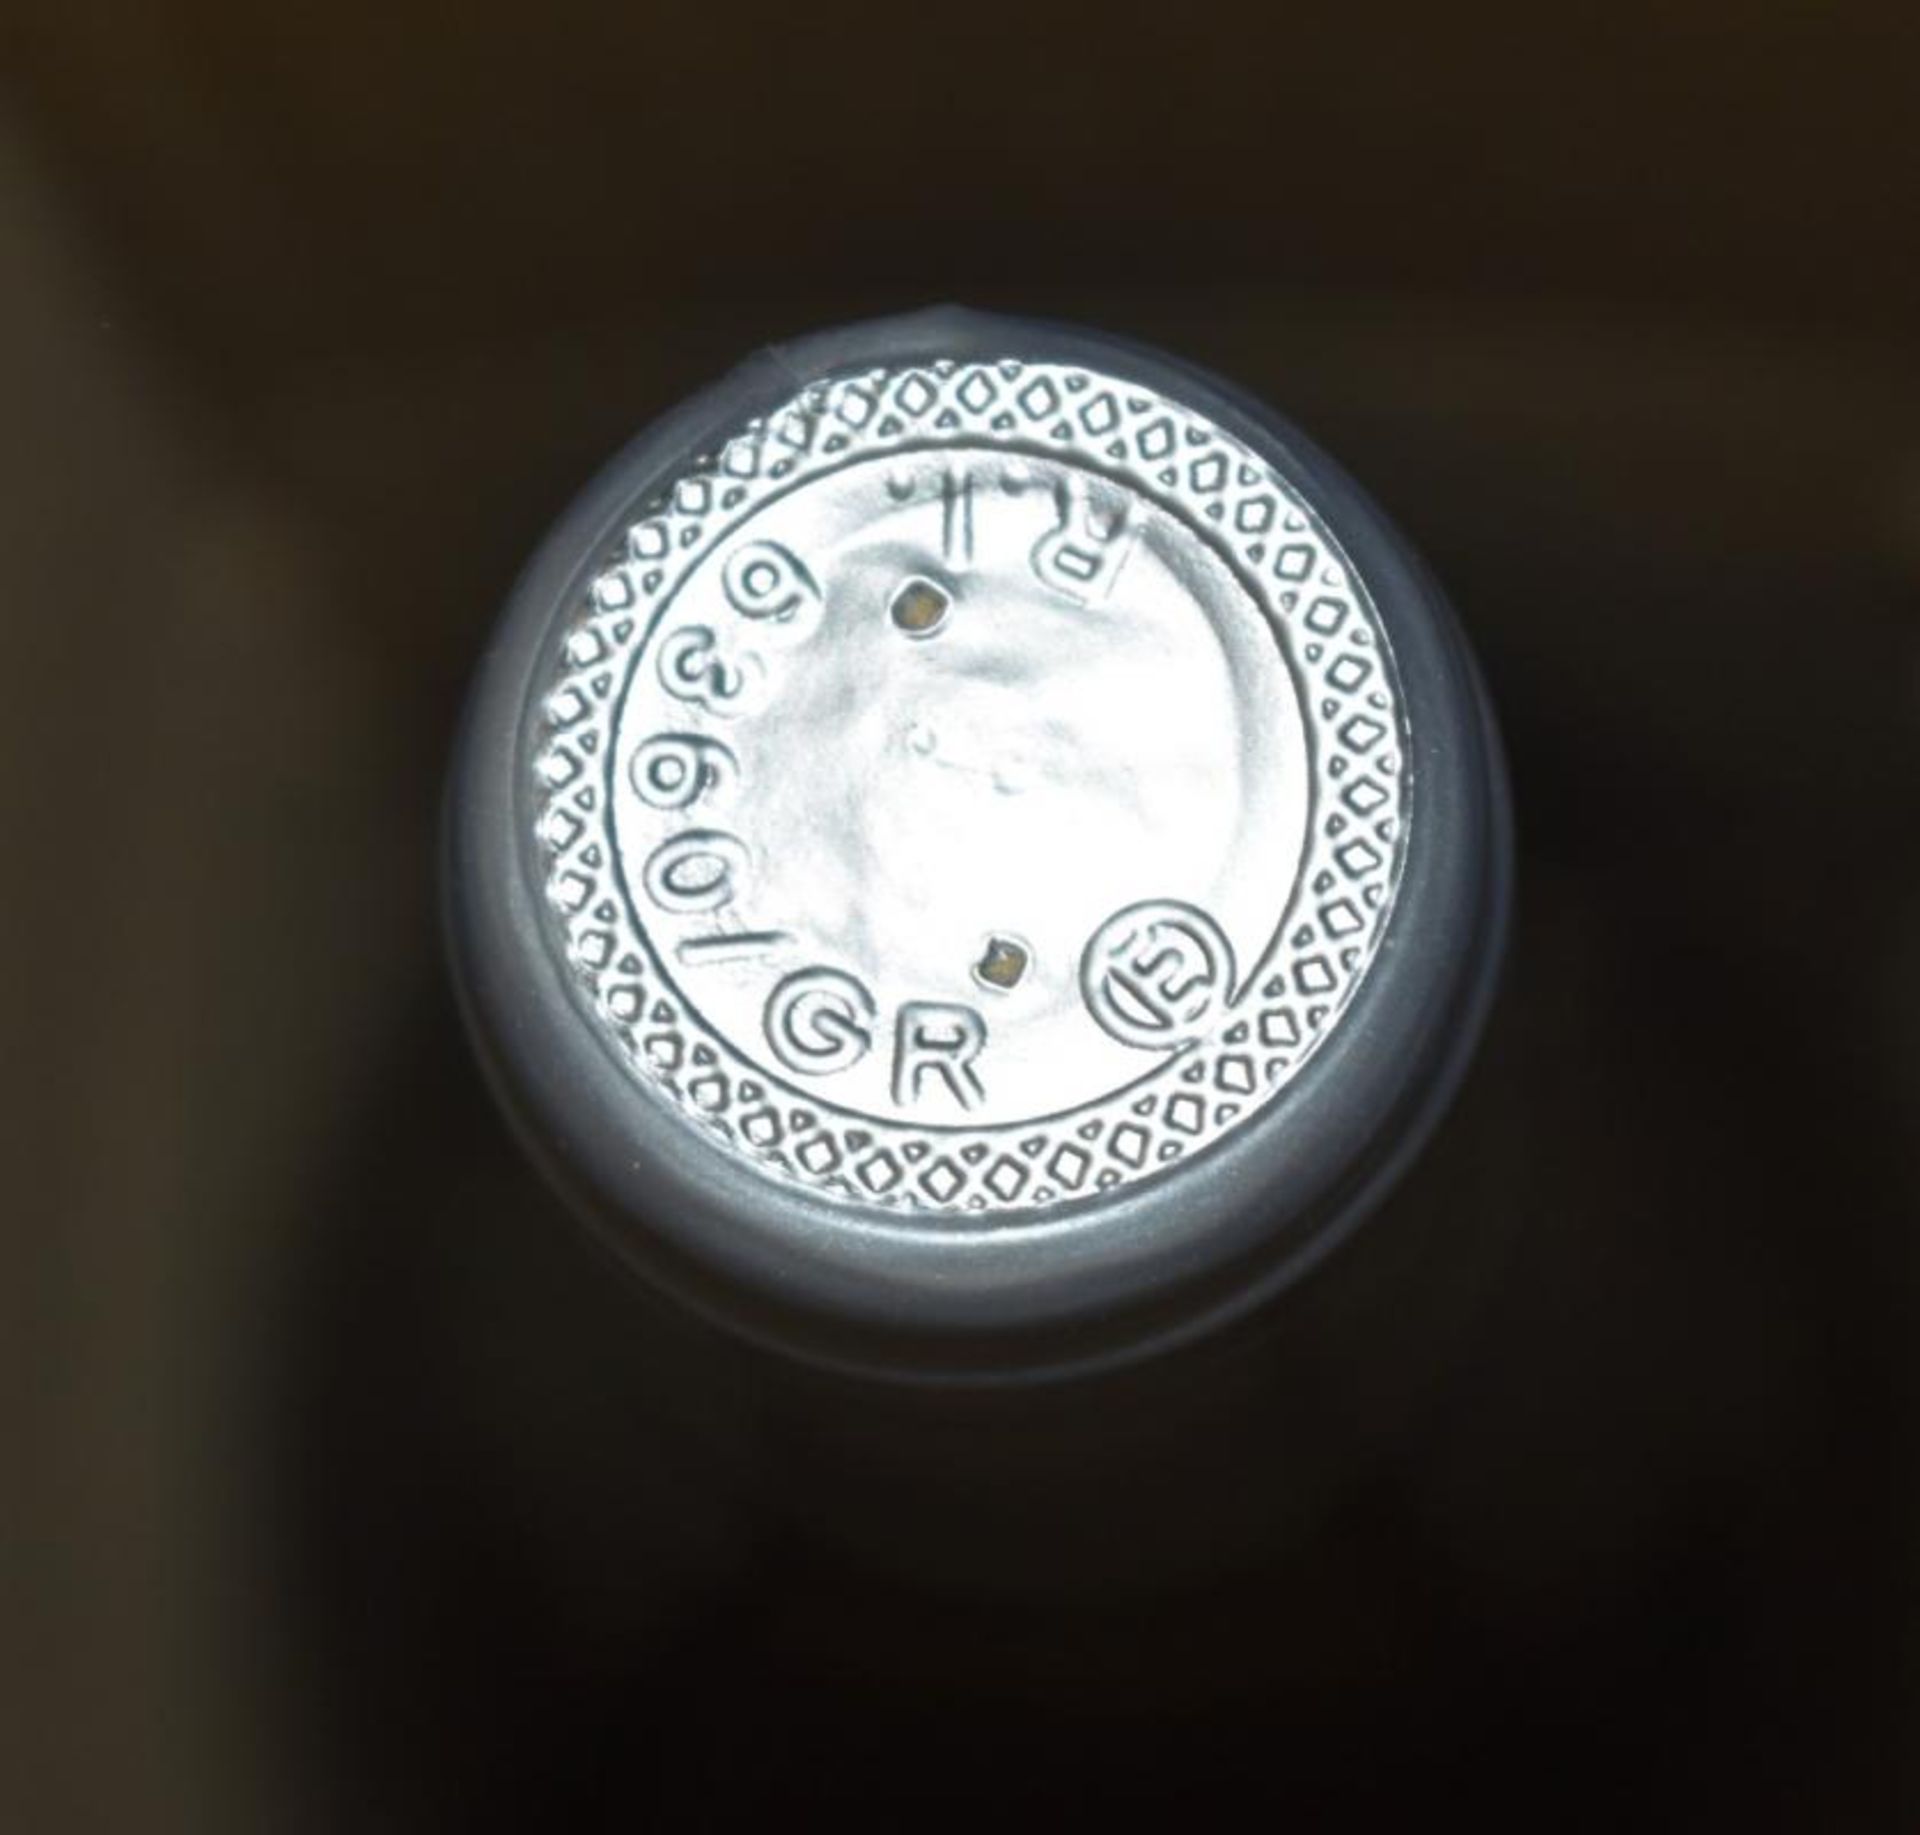 12 x Bottles of Stefano Di Blasi 2019 Vermentino Toscana 13.5% Wine - 750ml Bottles - Drink Until 20 - Image 3 of 6